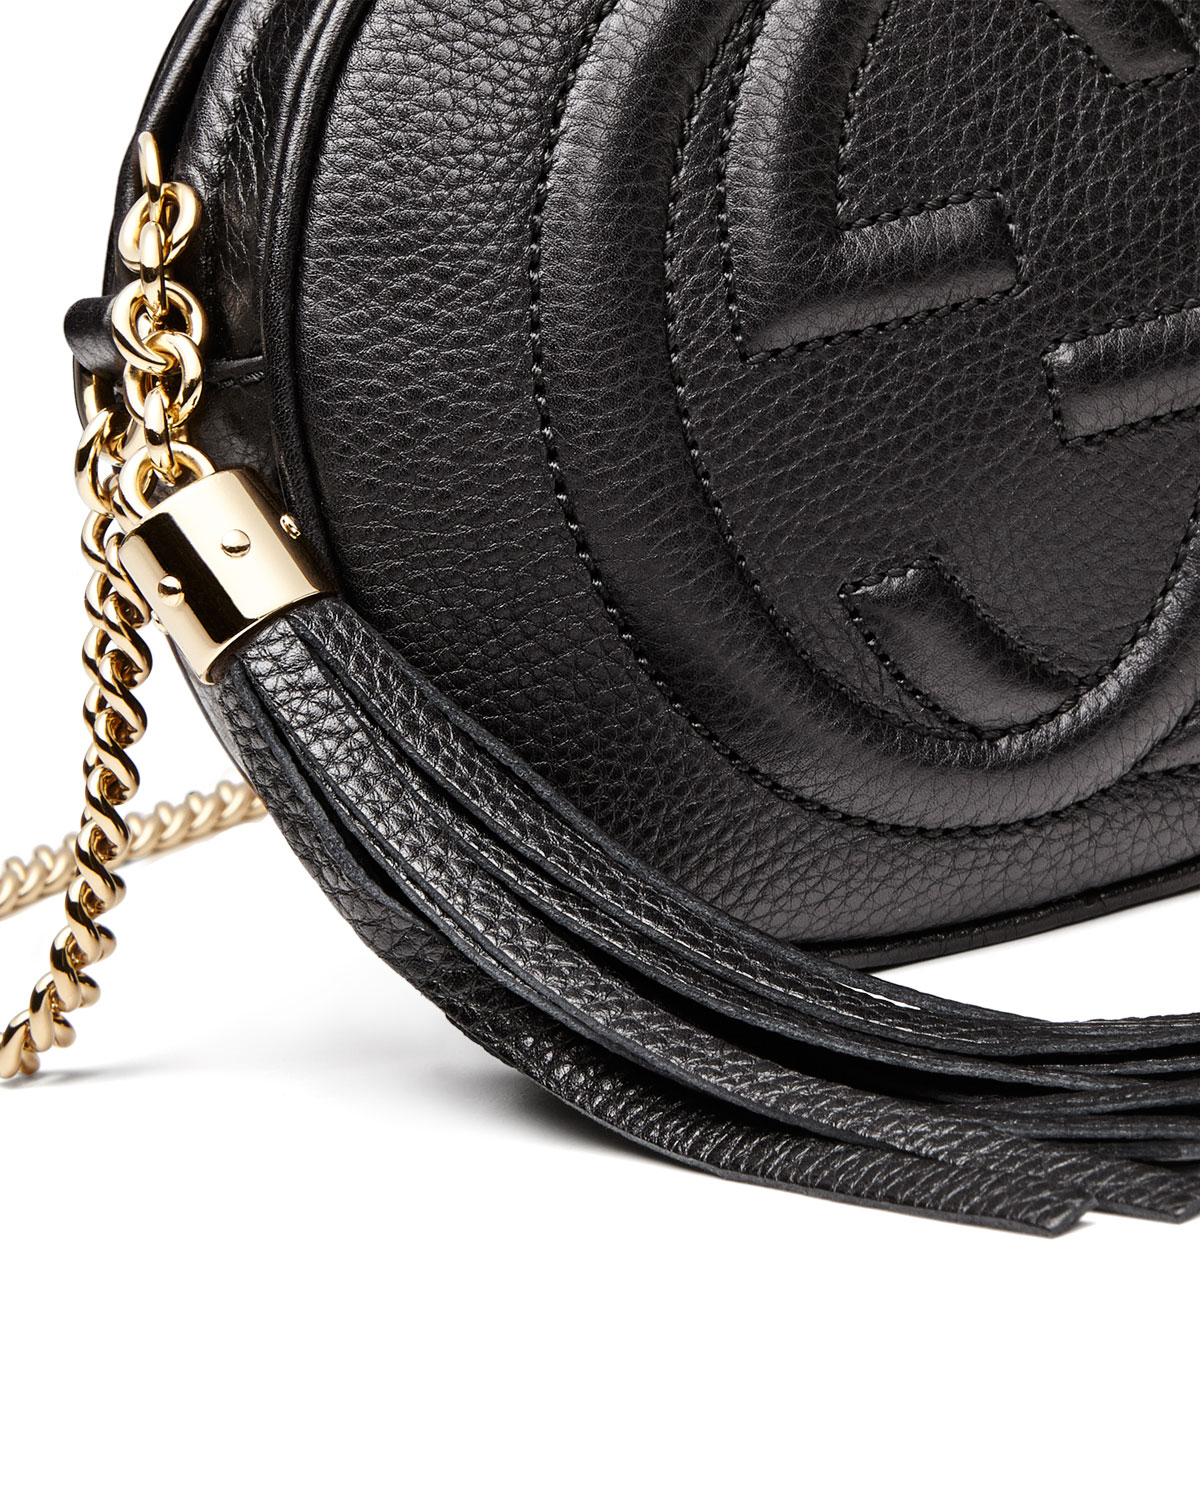 Lyst - Gucci Soho Leather Mini Chain Bag in Black